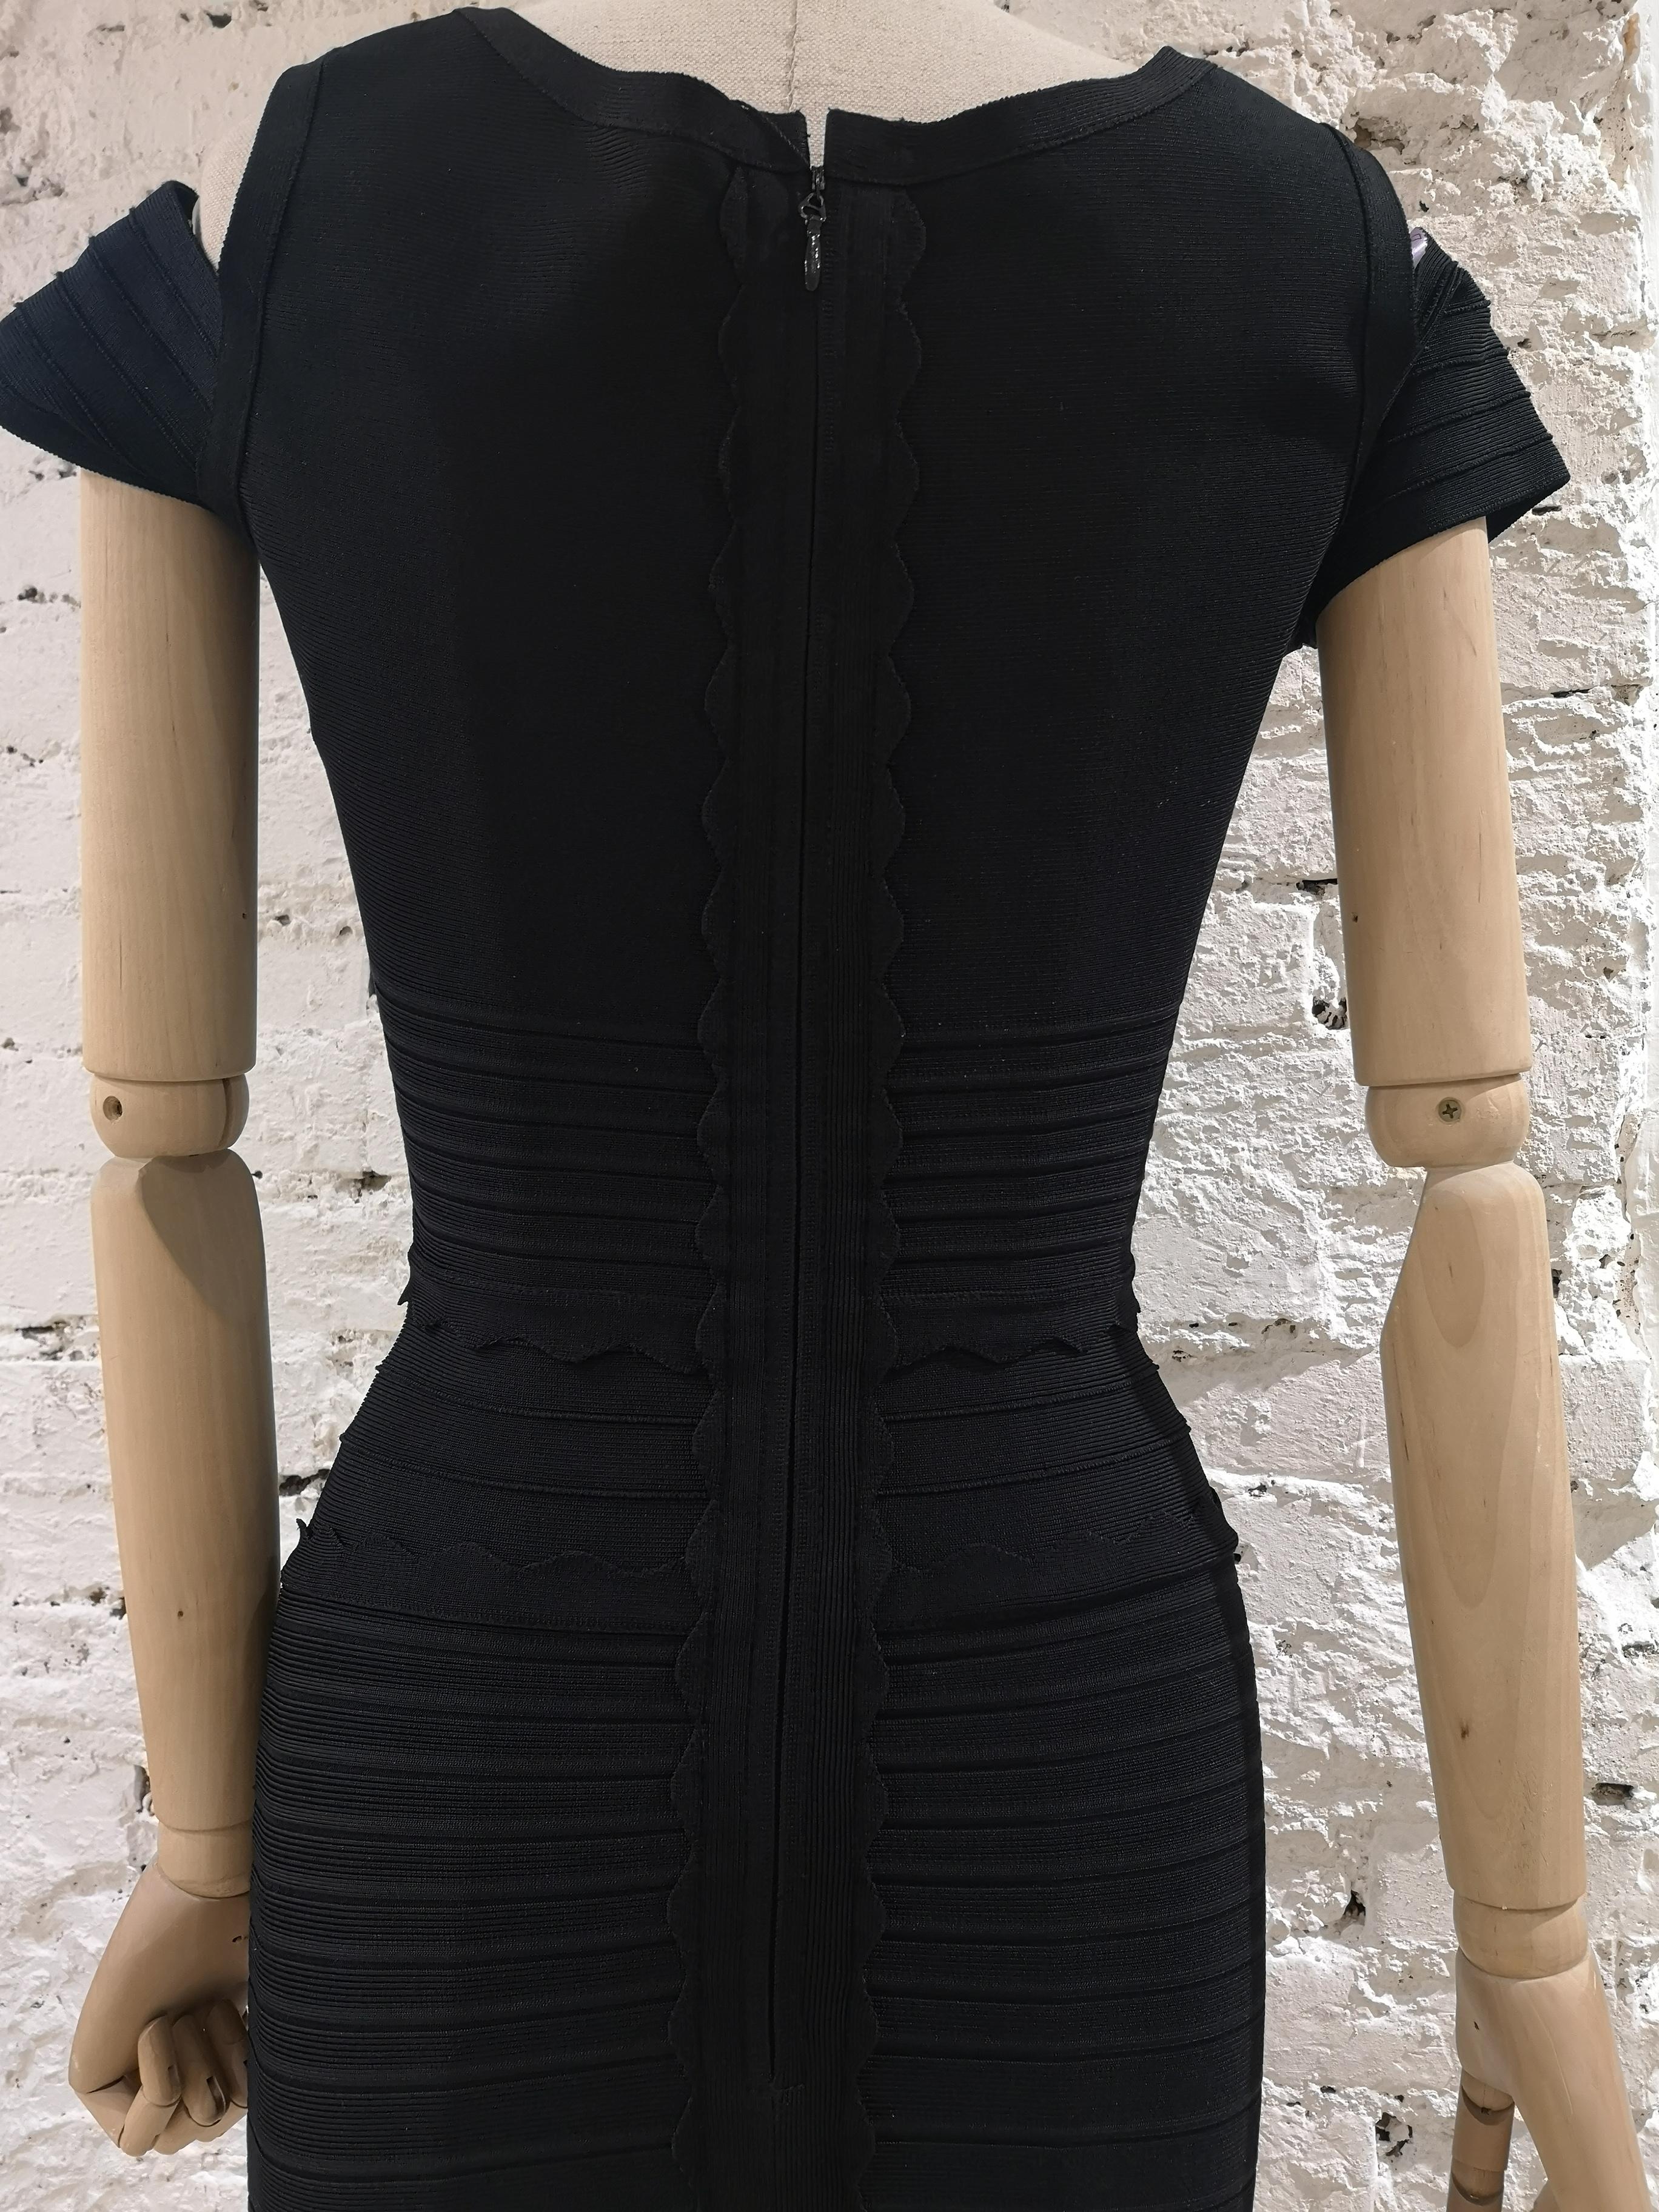 Hervé Léger Black Dress For Sale 5